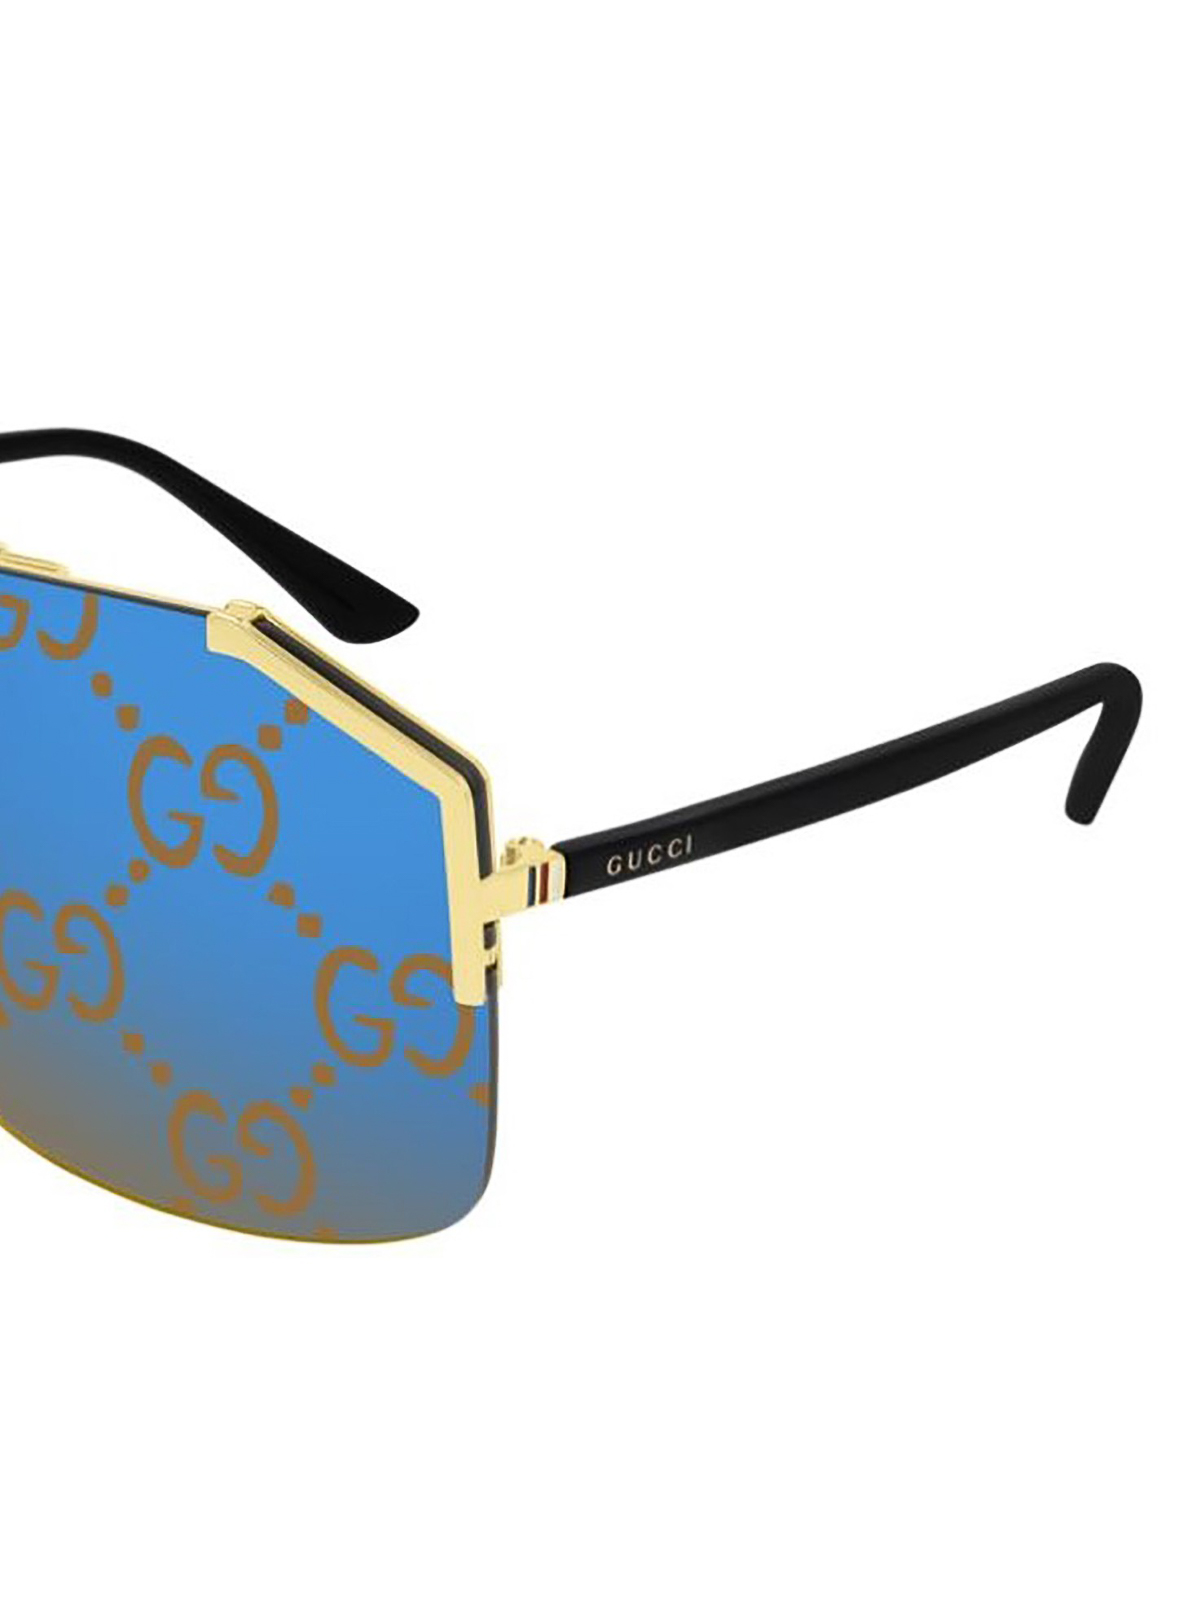 Gucci - Logo printed lens sunglasses 